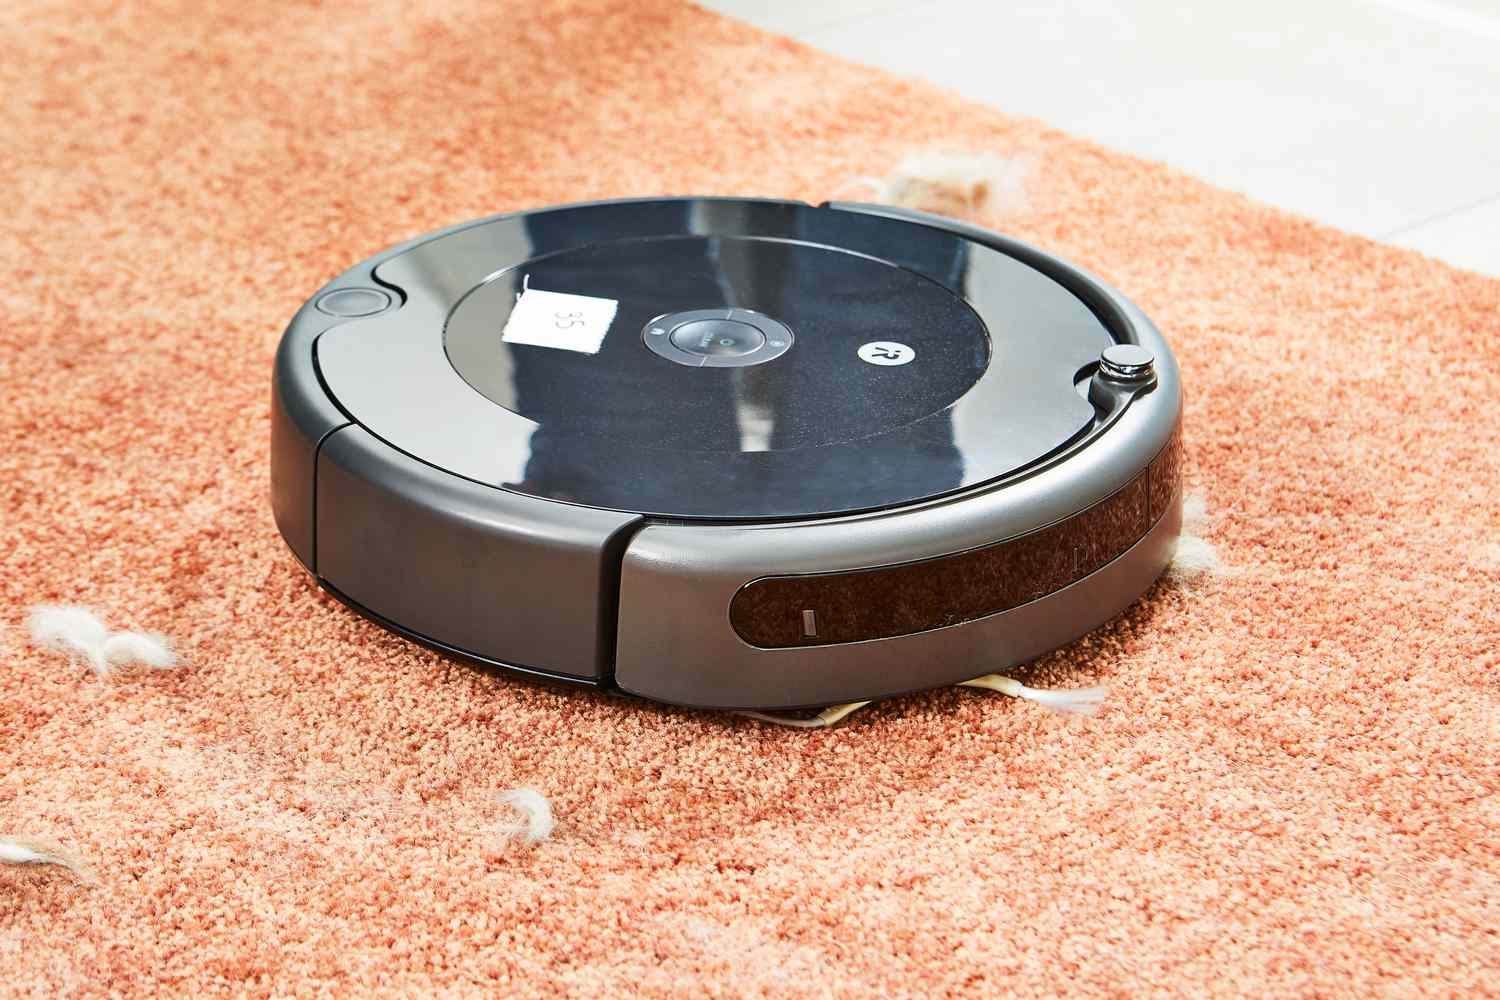 iRobot Roomba 694 Robot Vacuum cleaning fuzz from orange carpet